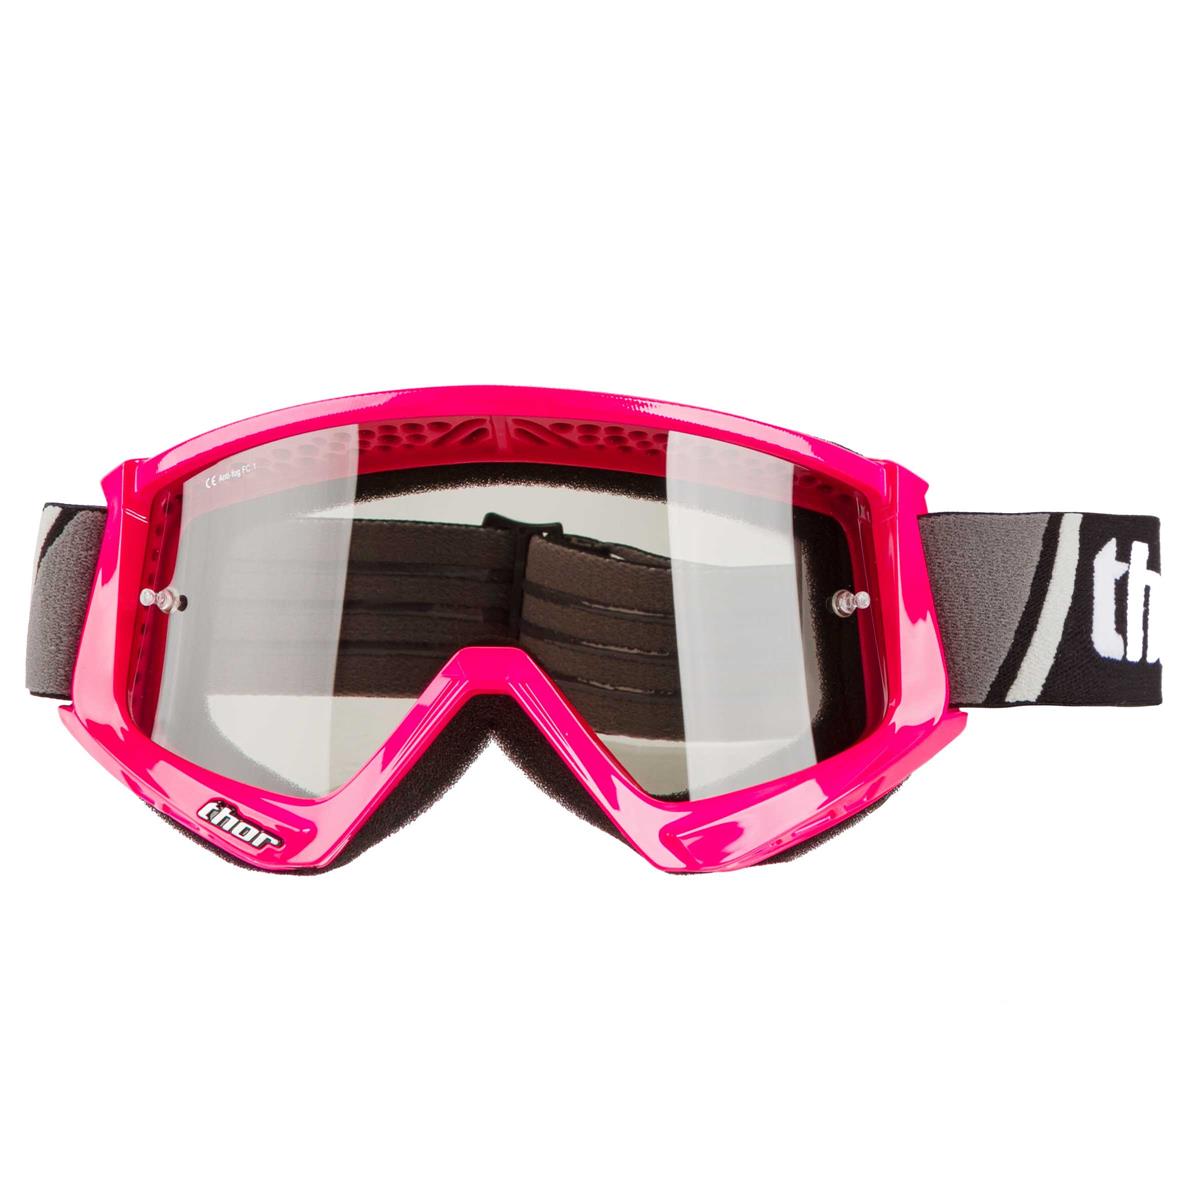 Thor MX Goggle Combat - Sand Flo Pink/Black - Lens Brown Anti-Fog